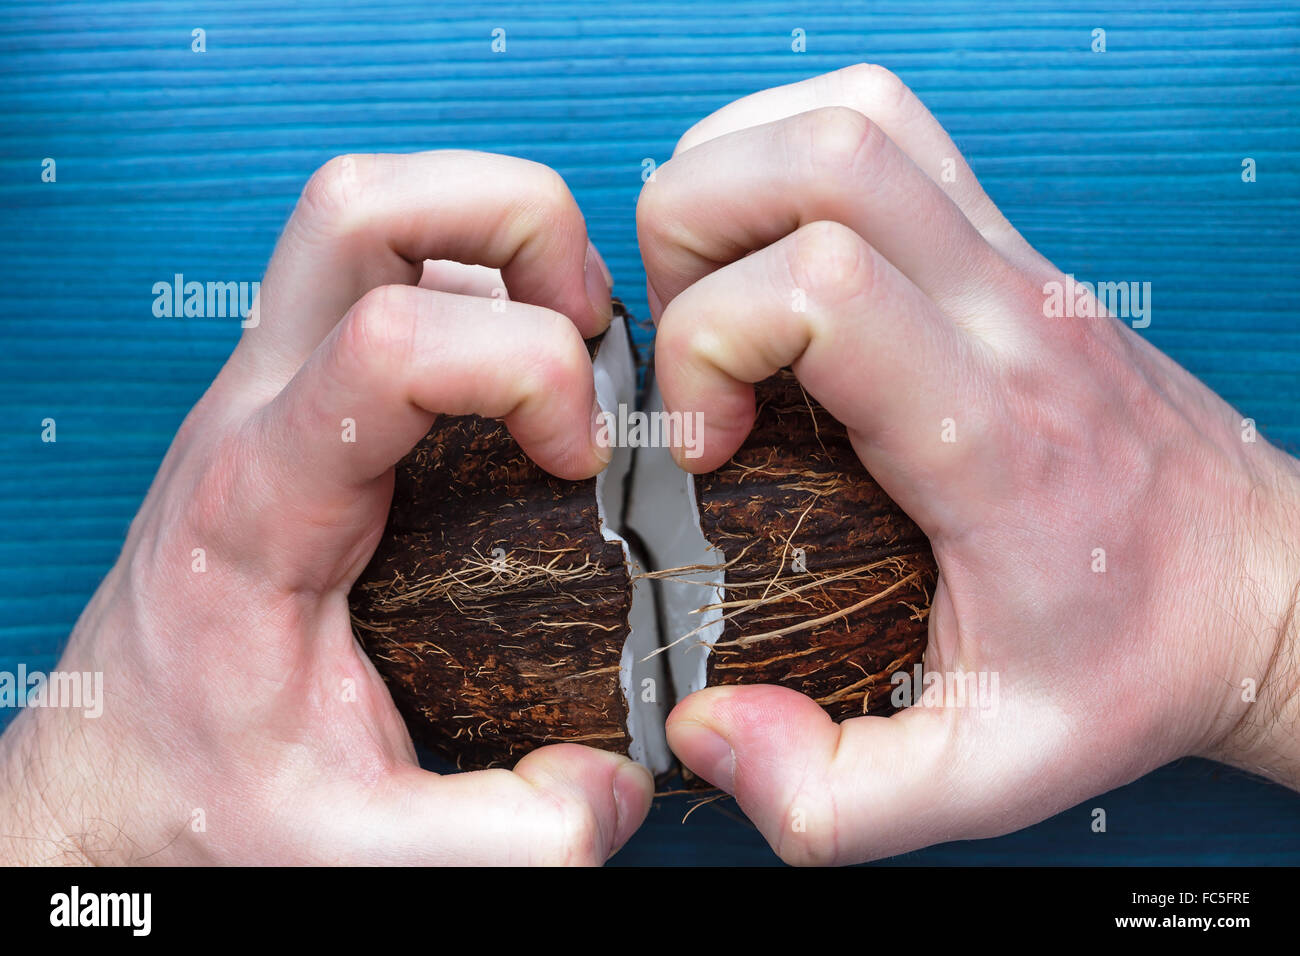 verärgerter Mann bricht eine Kokosnuss Walnuss in zwei Hälften Stockfoto